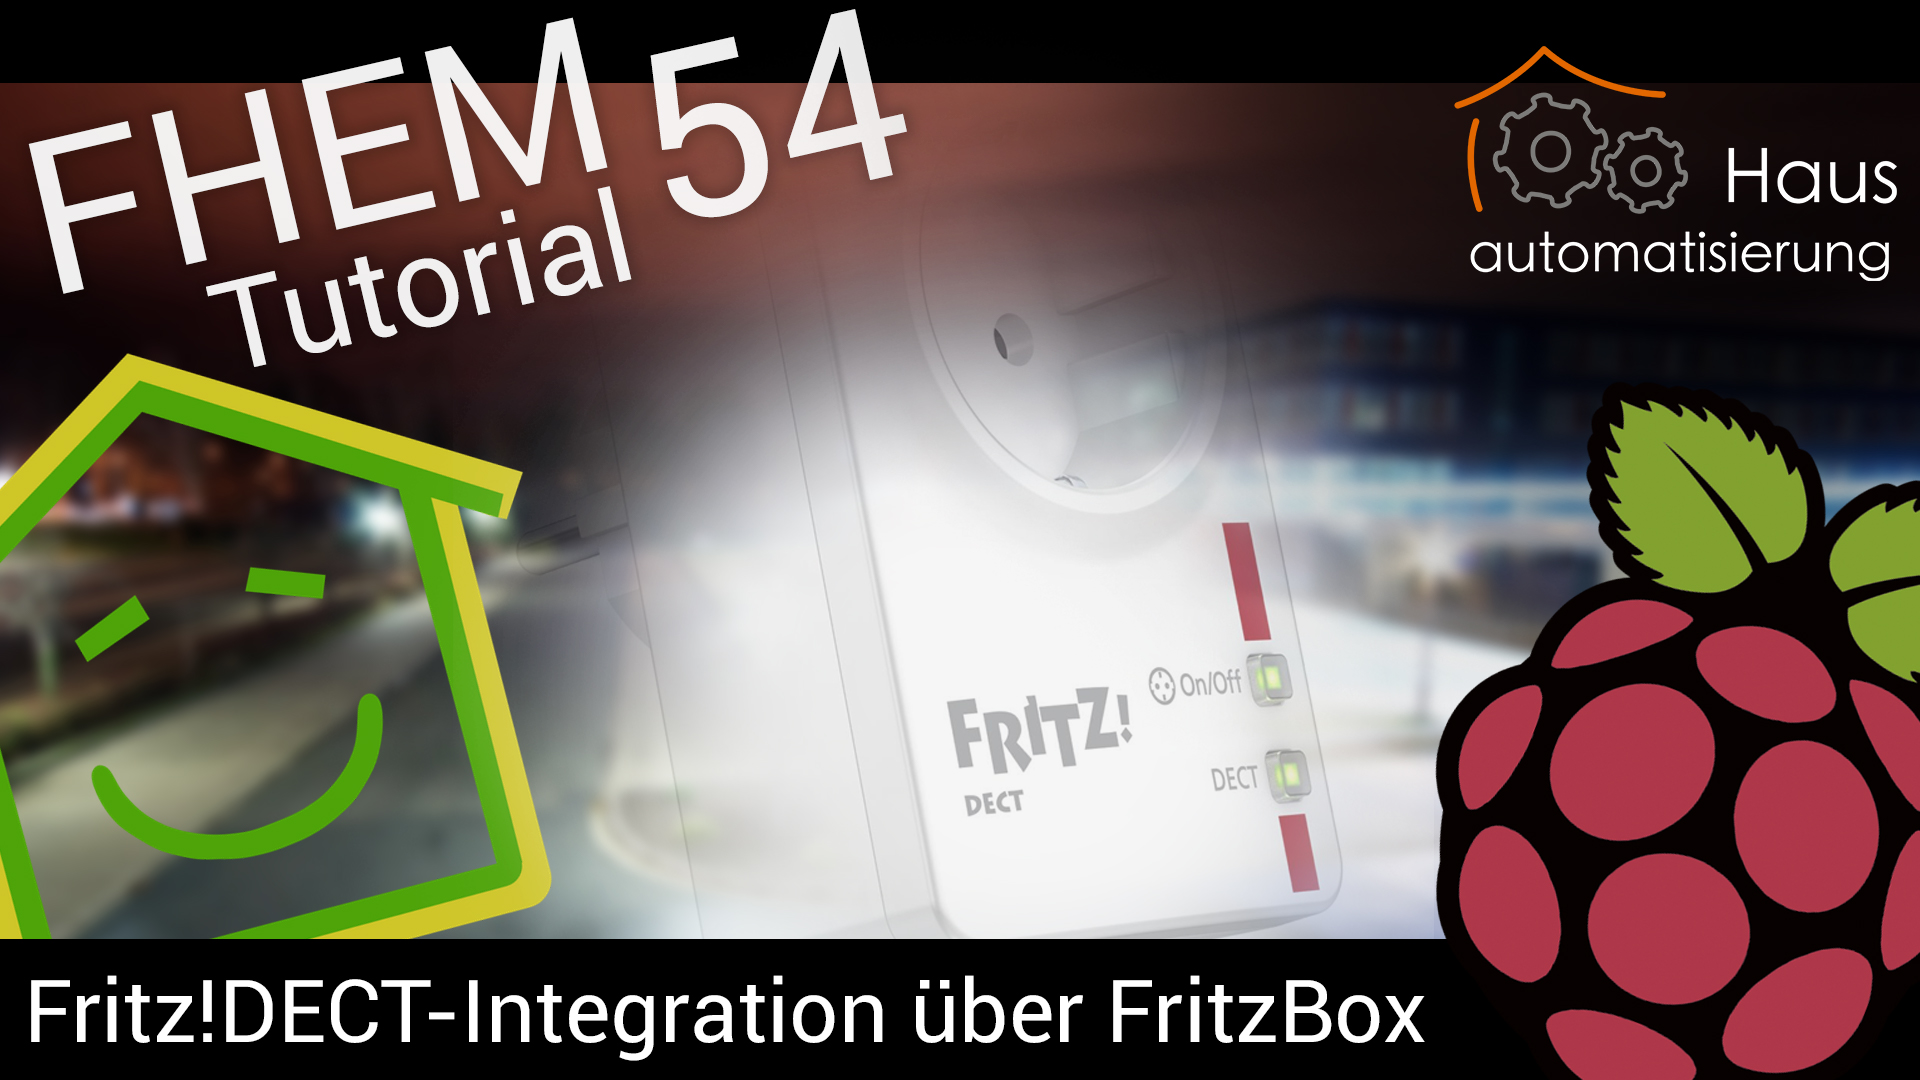 FHEM Tutorial-Reihe - Part 54: Fritz!DECT-Integration in FHEM